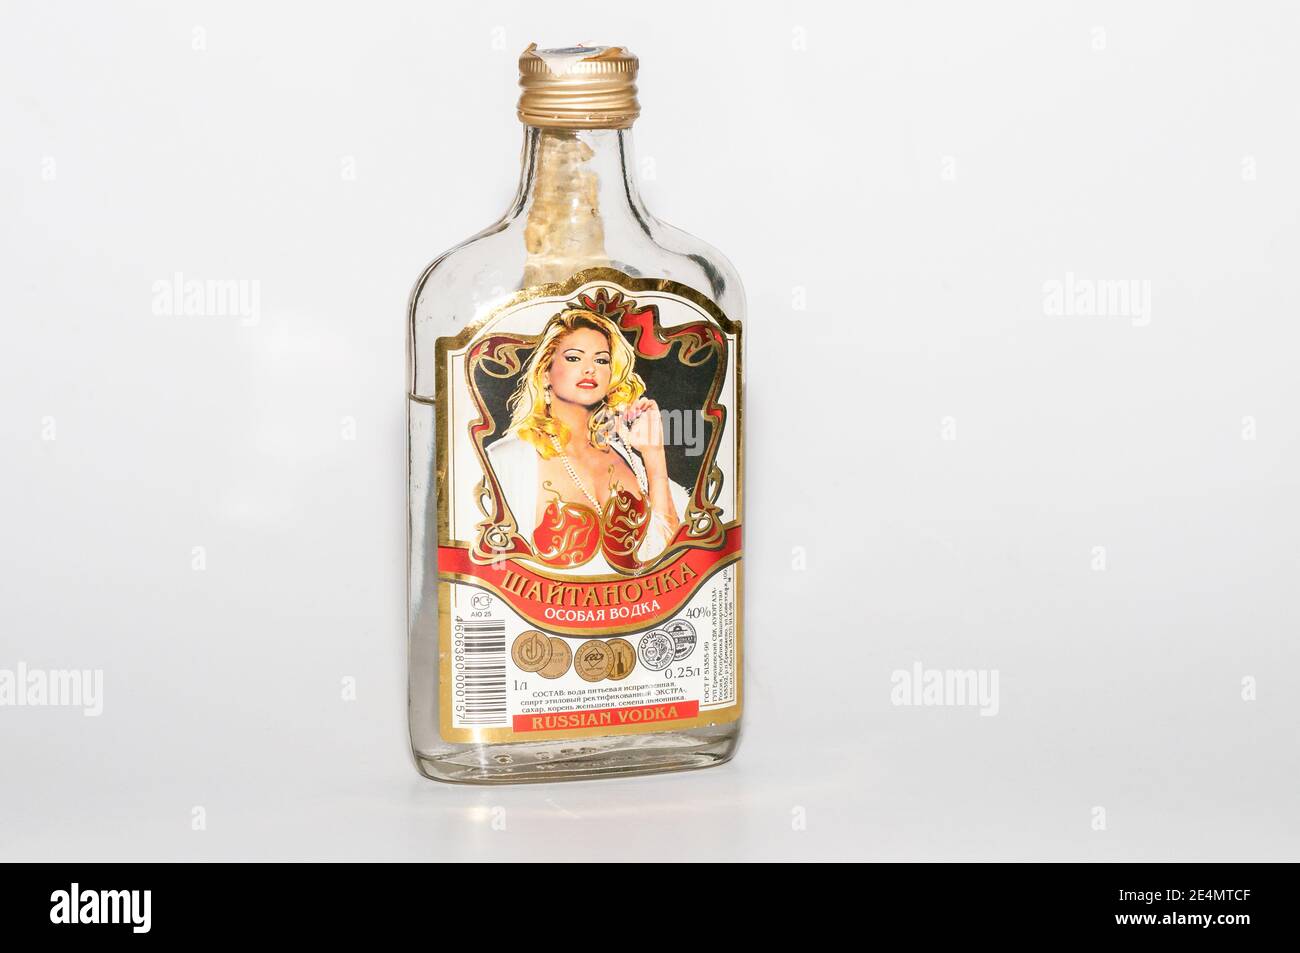 shaytanochka vodka, bottle of Russian Vodka, flask Stock Photo